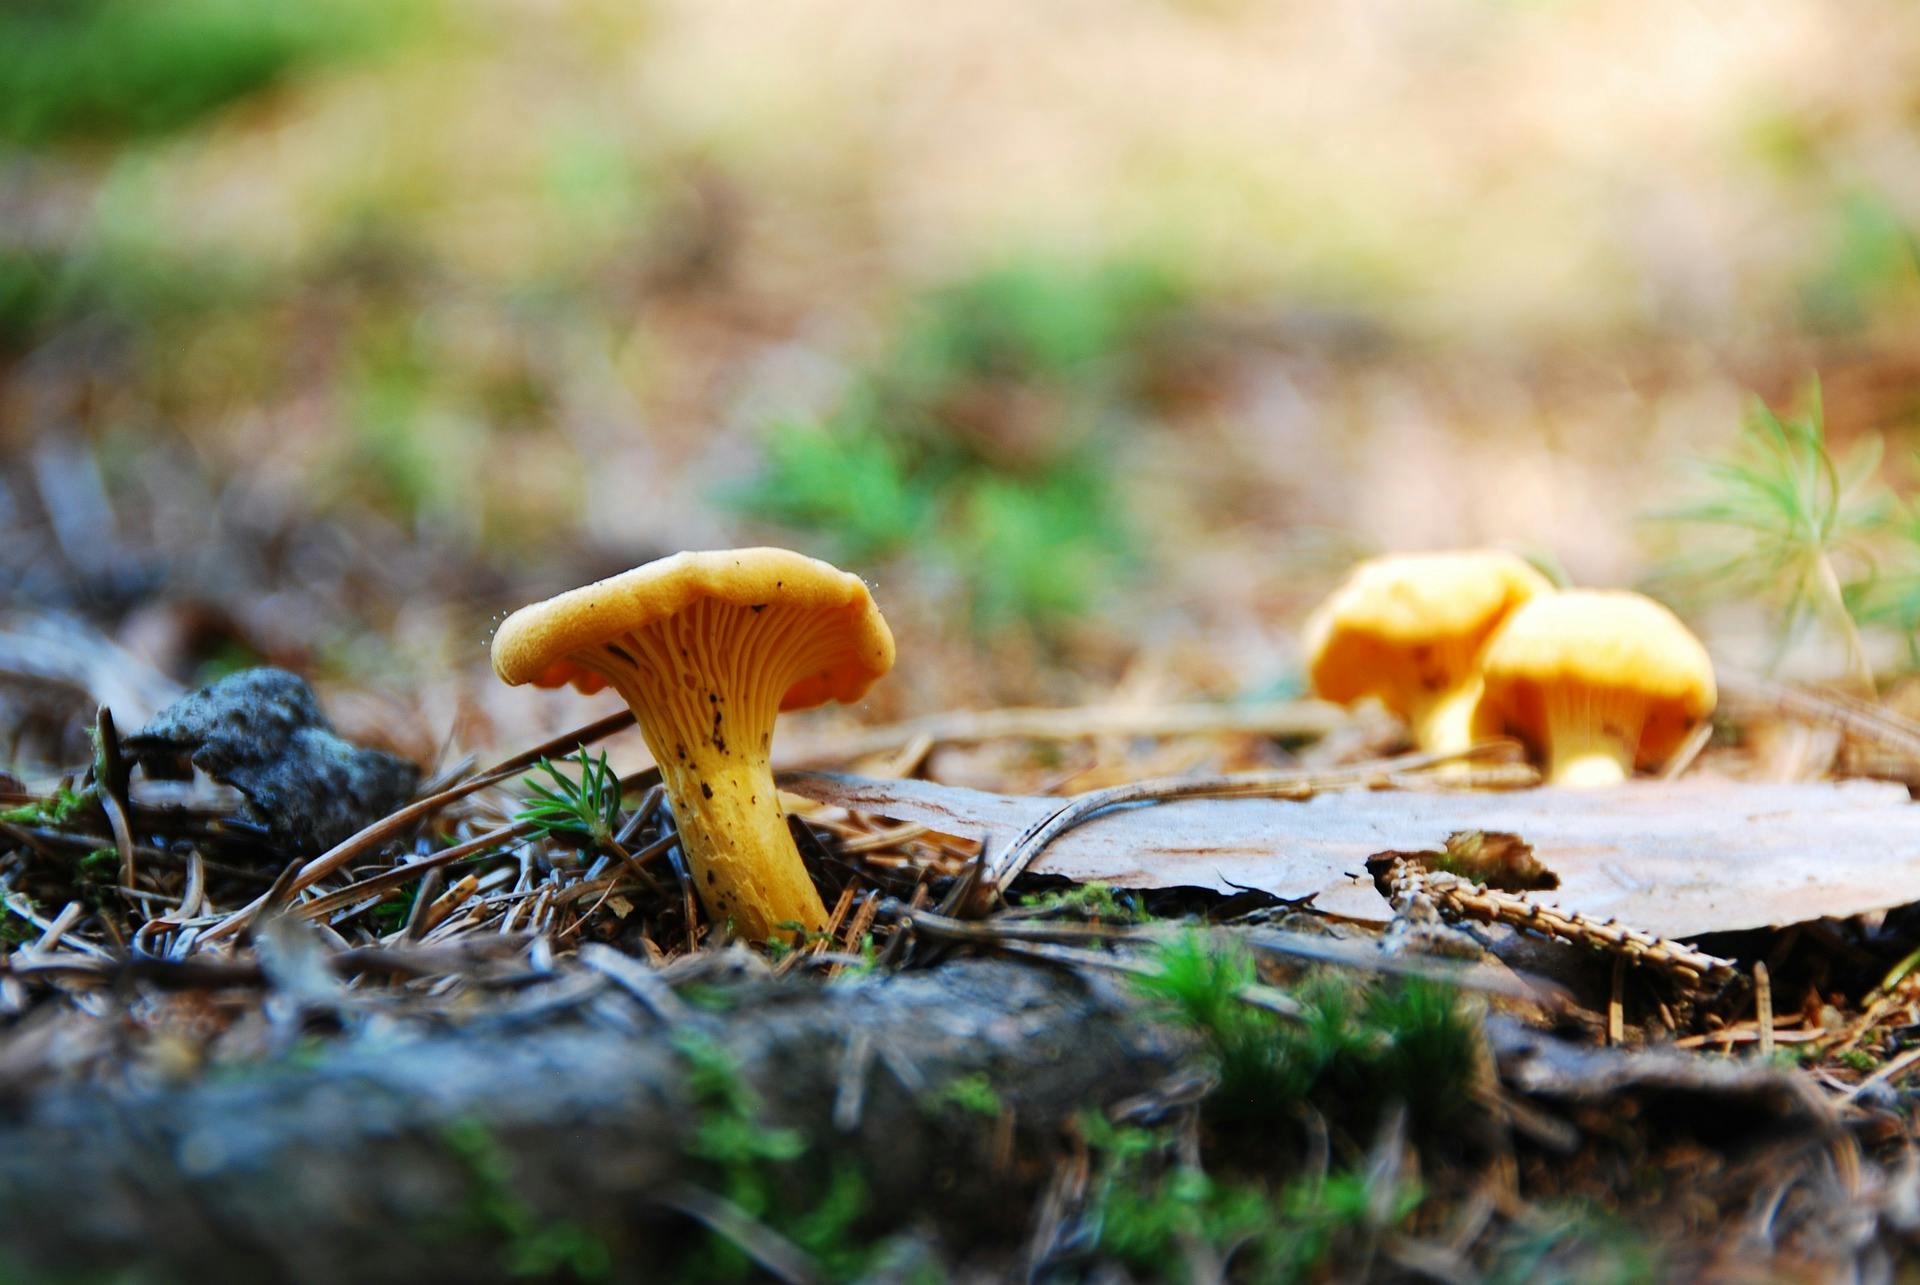 Chanterelle mushroom in the wild